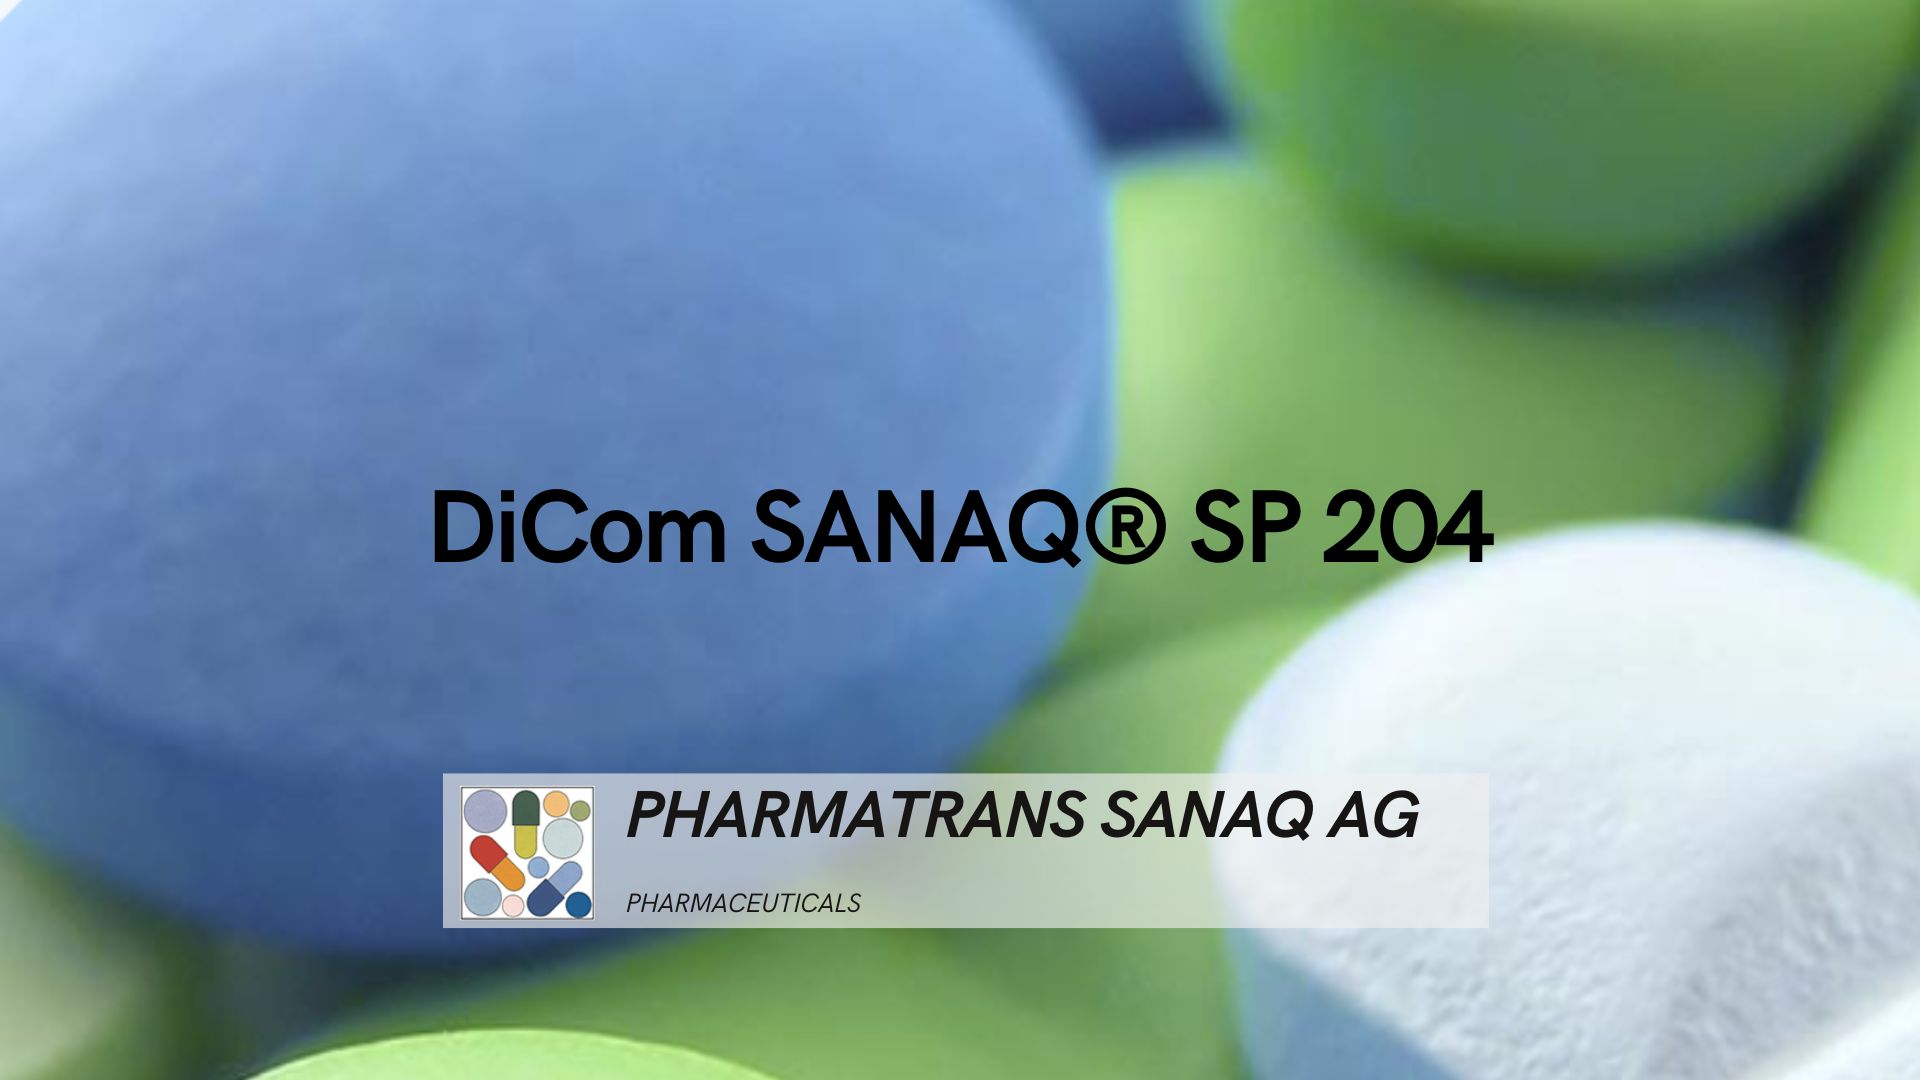 Pharmatrans Sanaq AG_DiCom Sanaq SP204